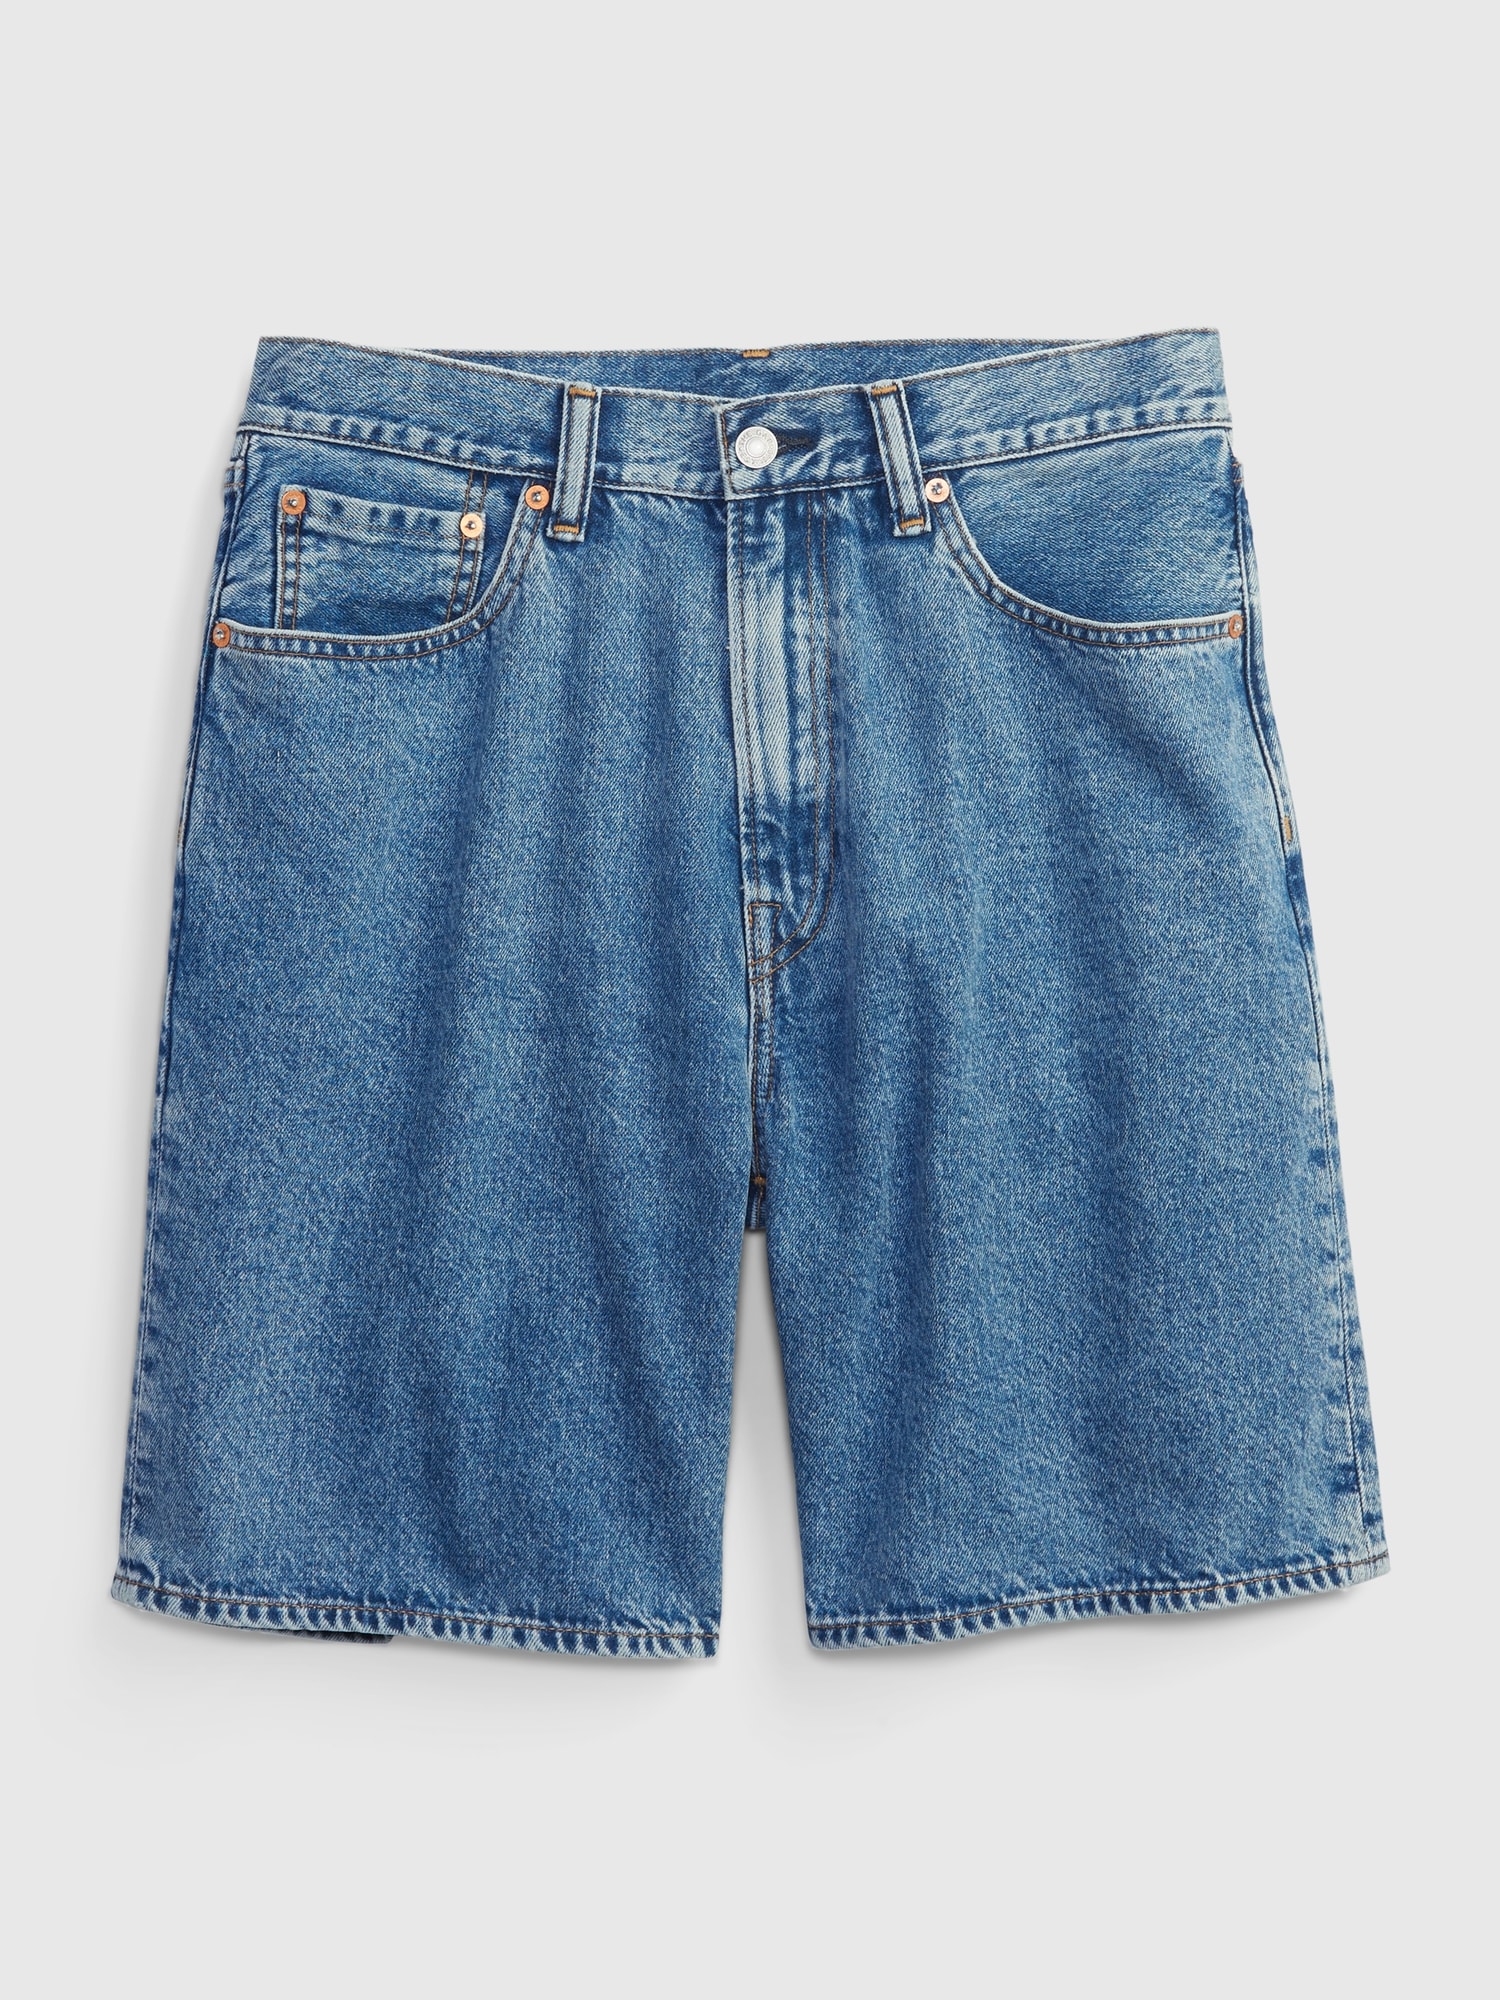 90s Loose Denim Shorts with Washwell | Gap